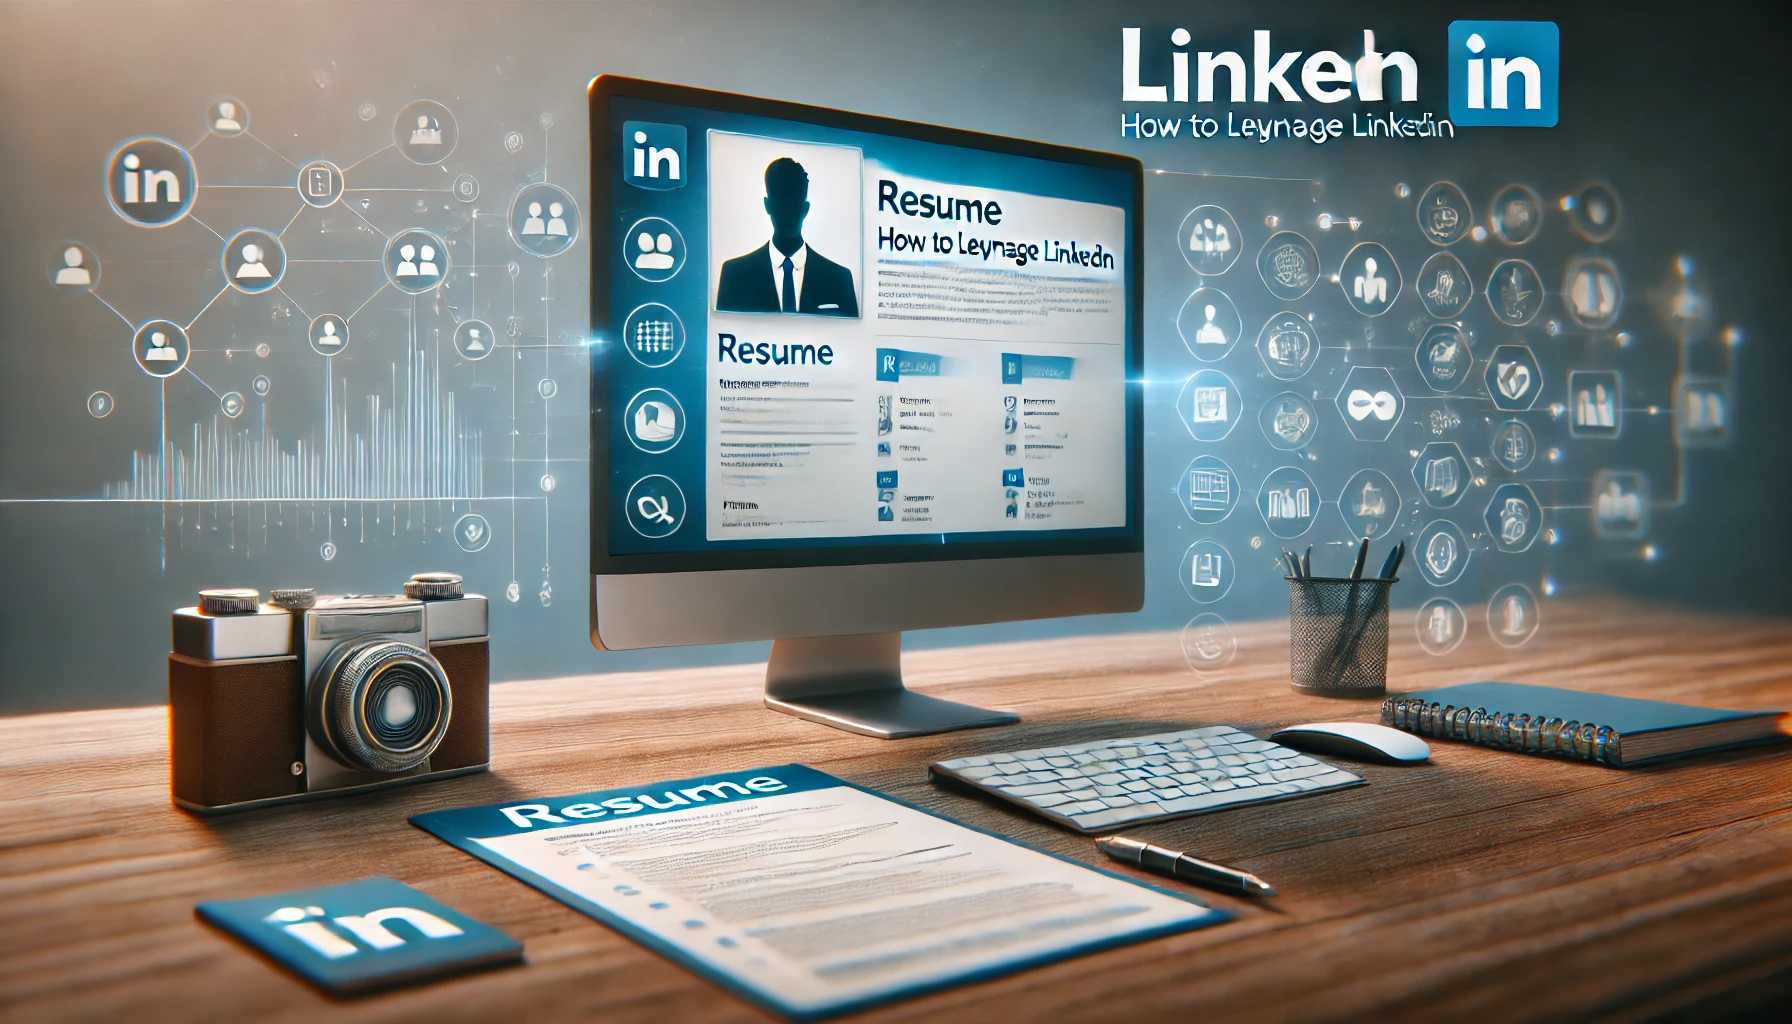 Resume: How to Leverage LinkedIn